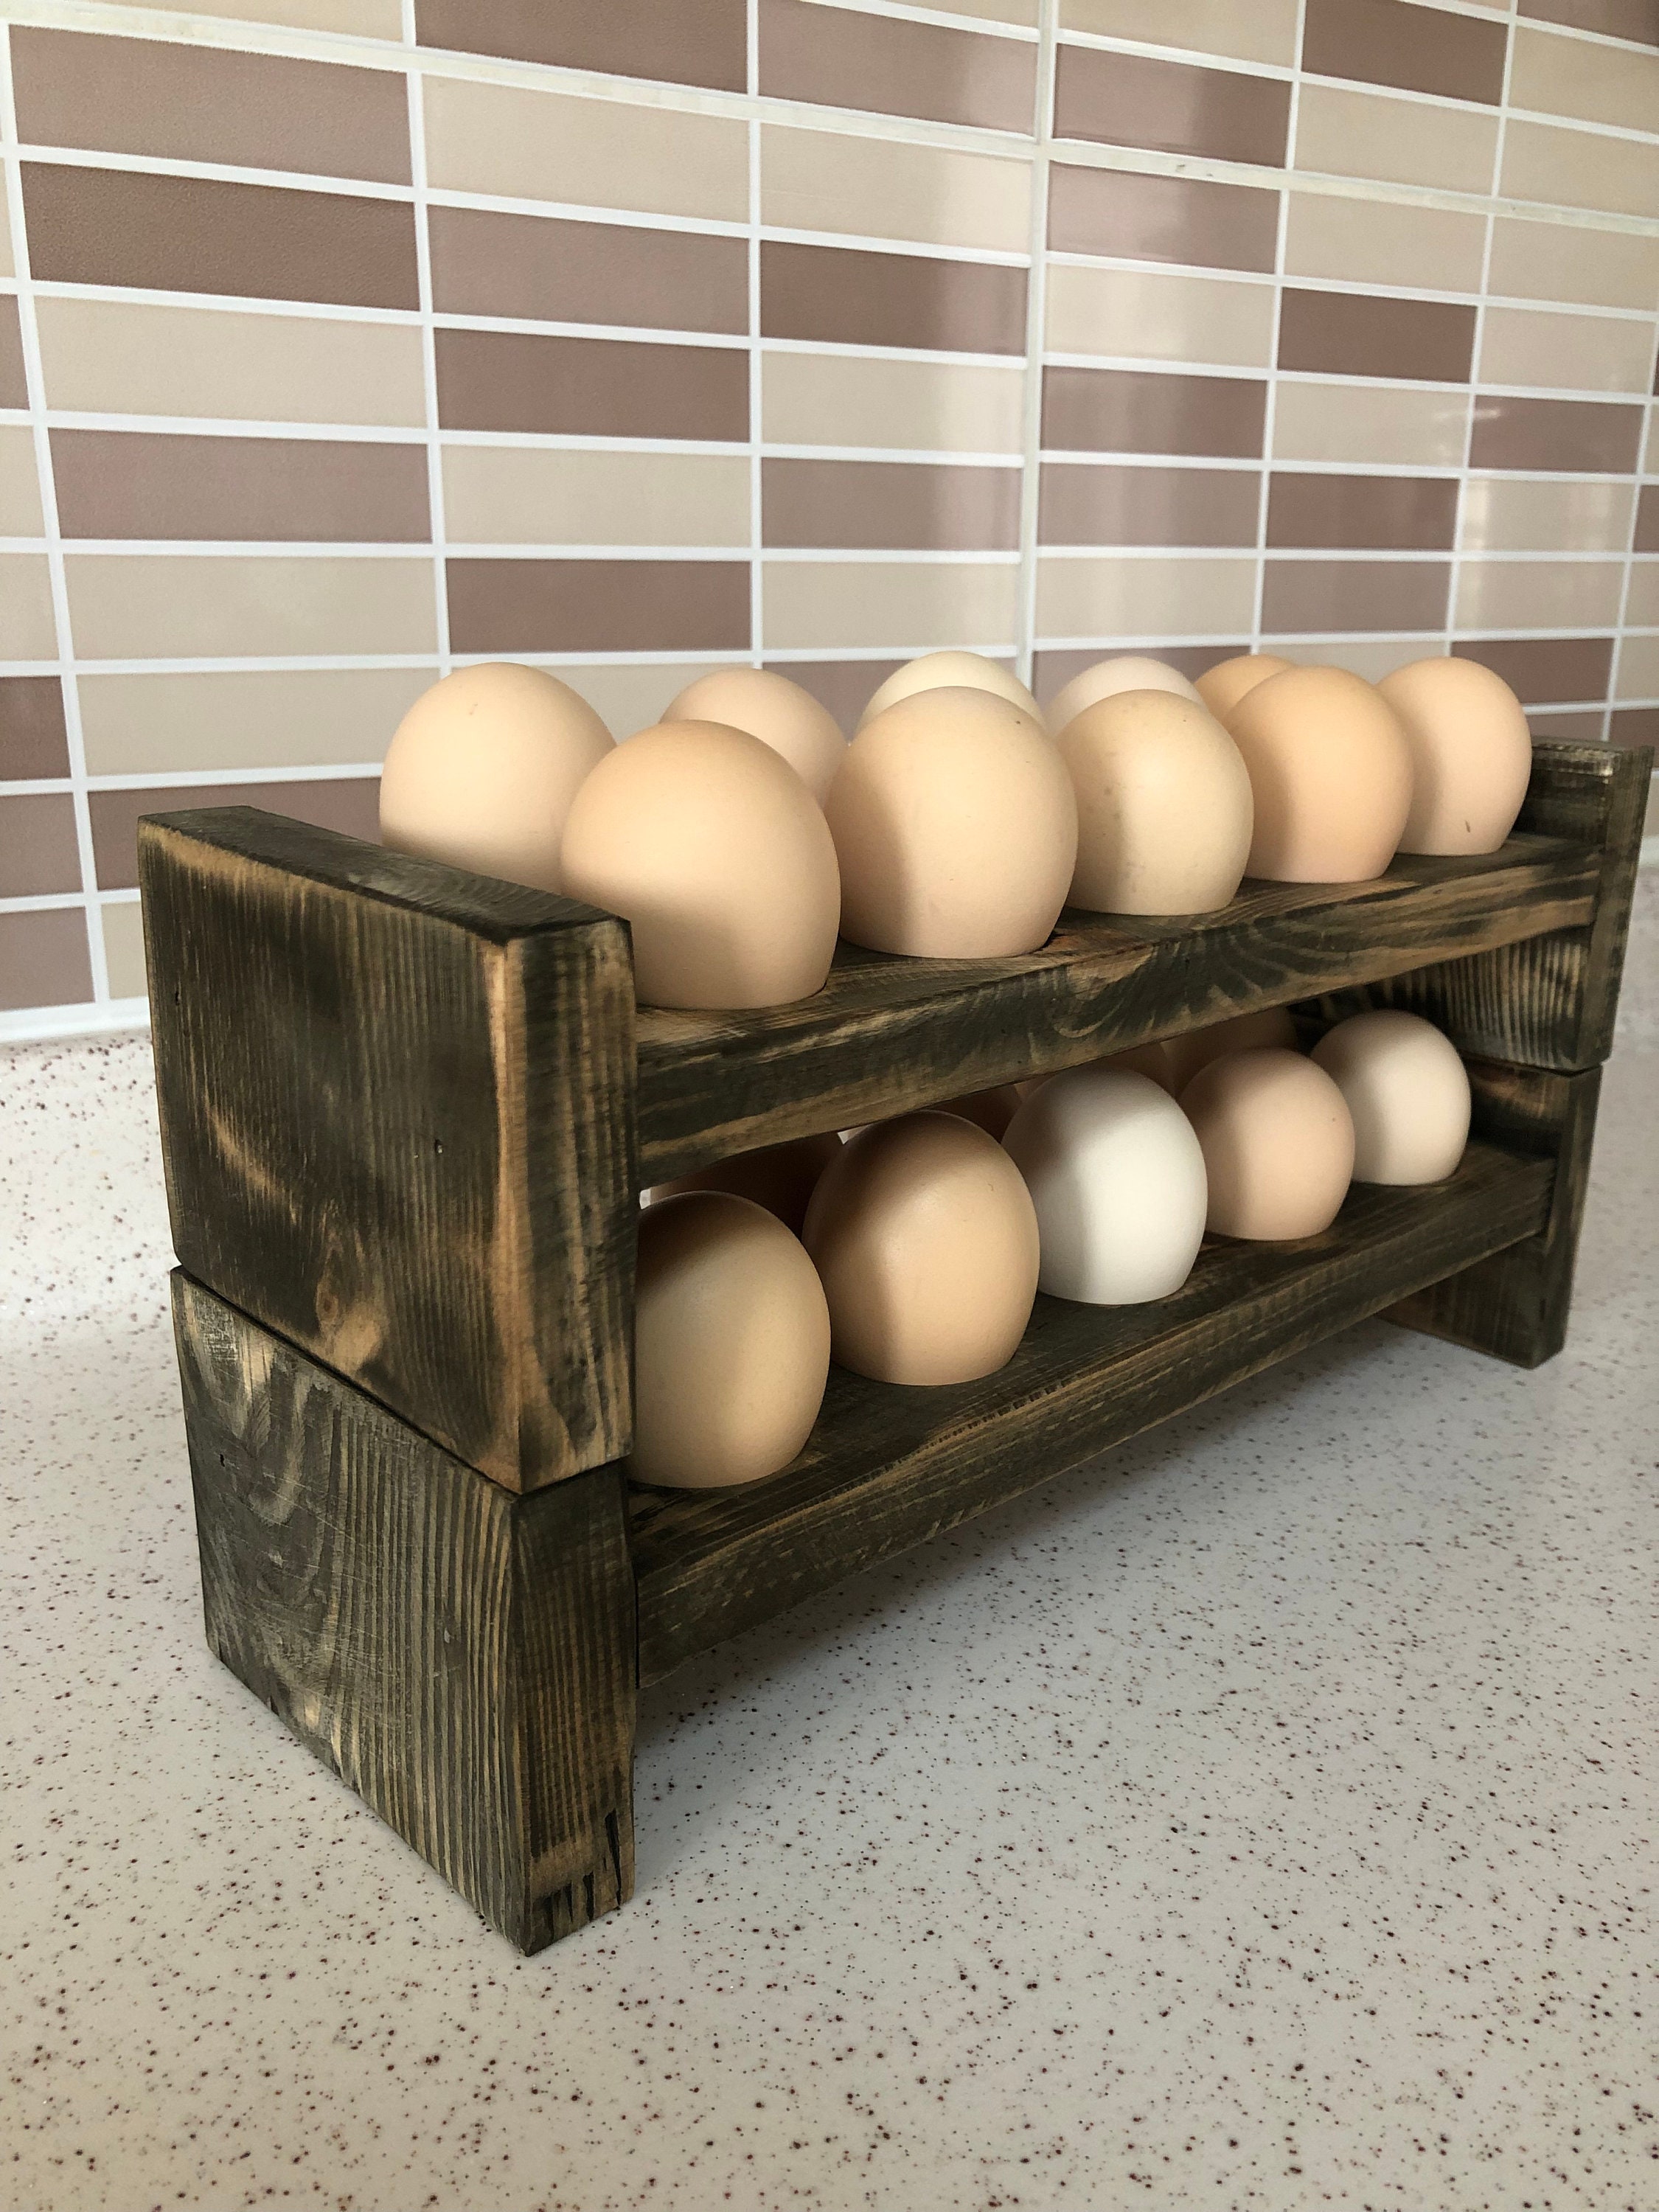 Farmhouse Personalized Stackable Wood Egg Holder L Chicken Egg L Fresh Egg  Storage L Wooden Egg Holder L Wood Egg Carton L Egg Tray Gift 